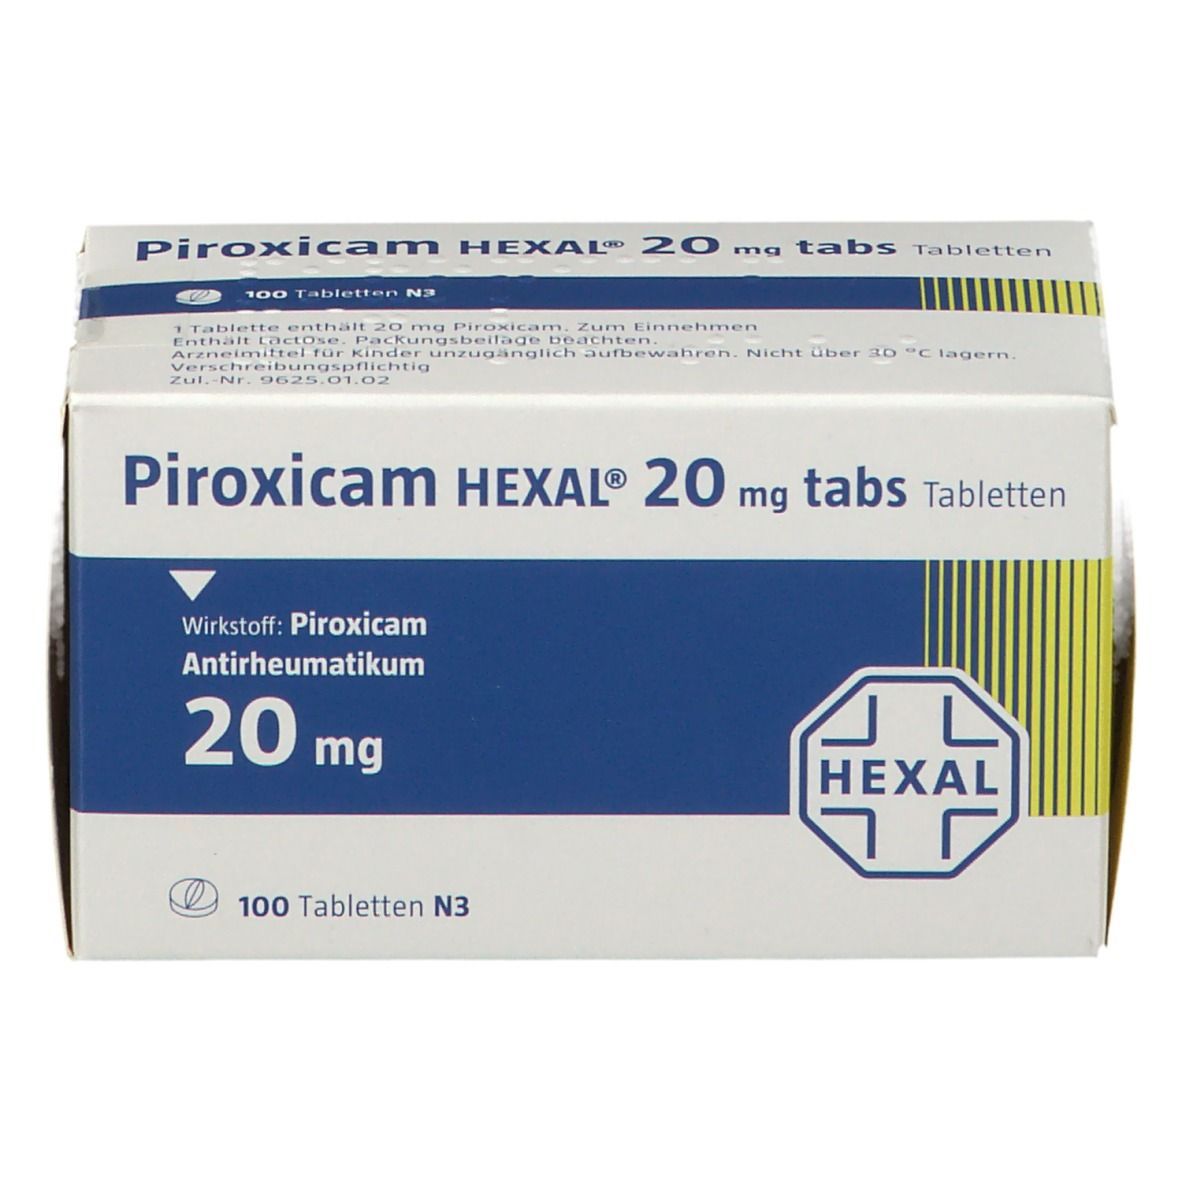 Piroxicam HEXAL® 20 mg tabs